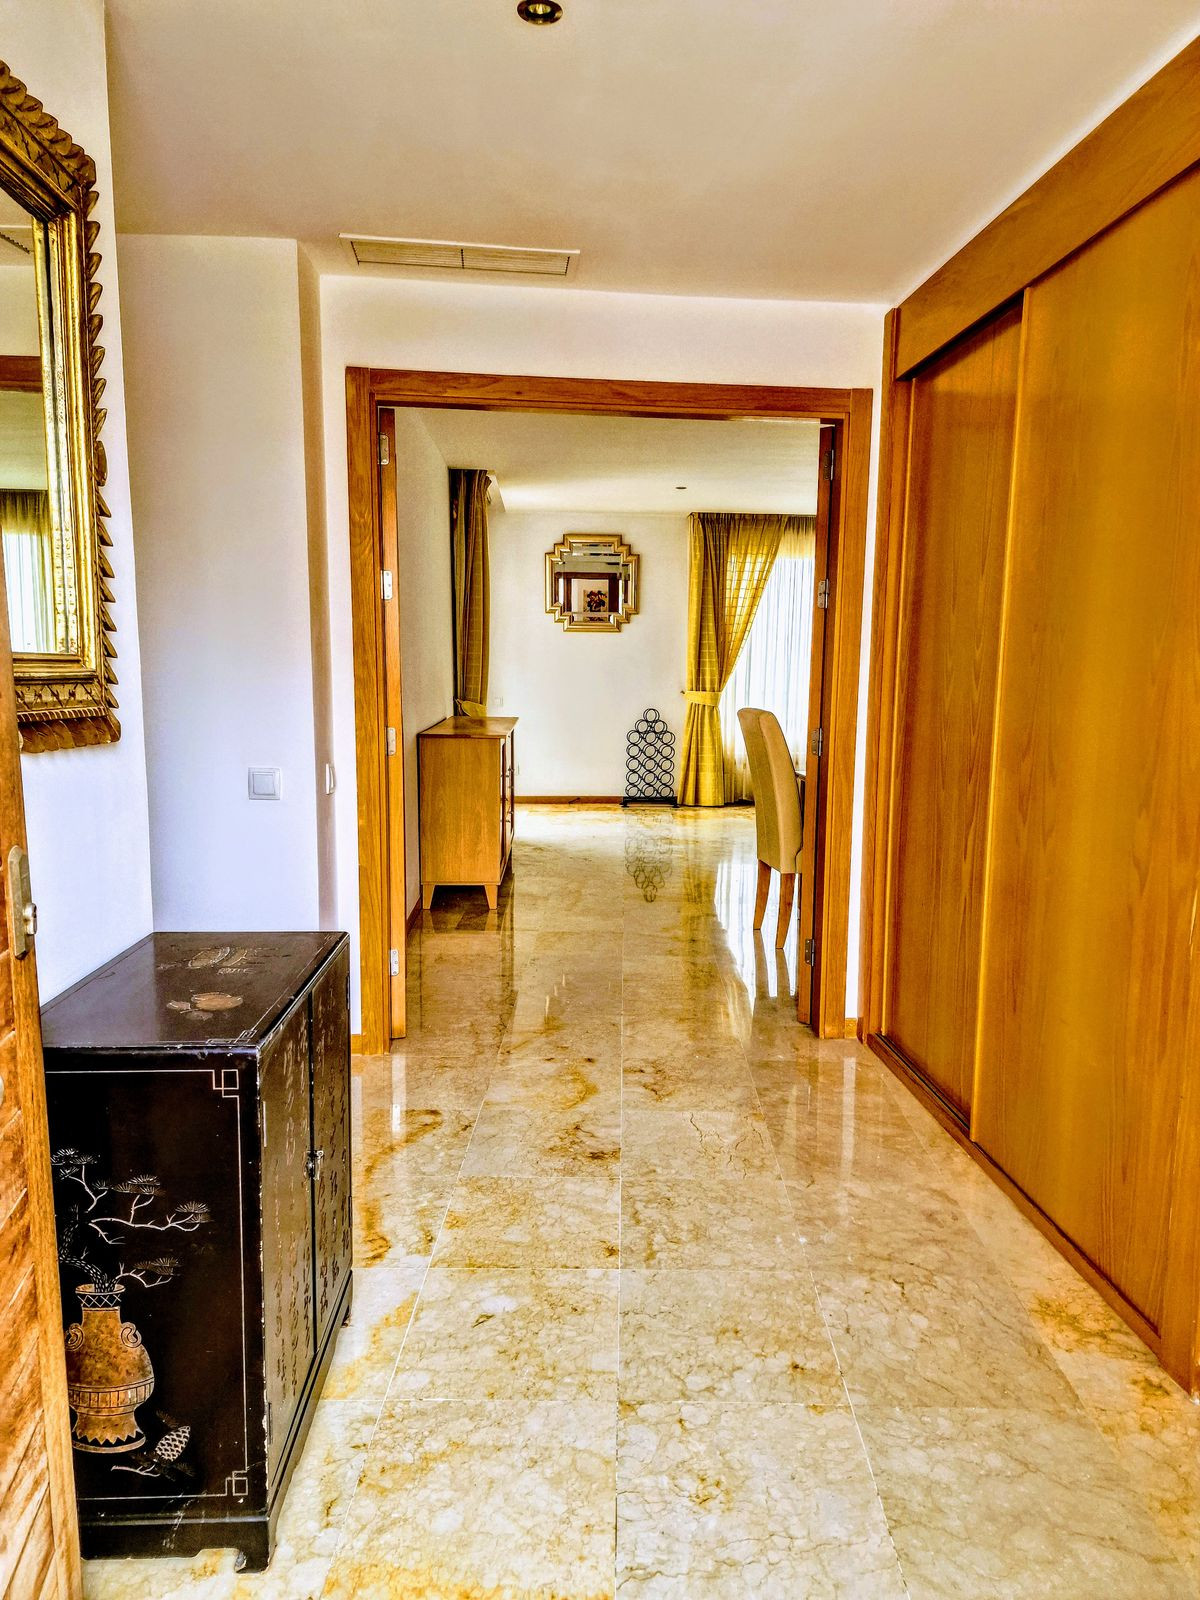 3 bedroom Apartment For Sale in Marbella, Málaga - thumb 5